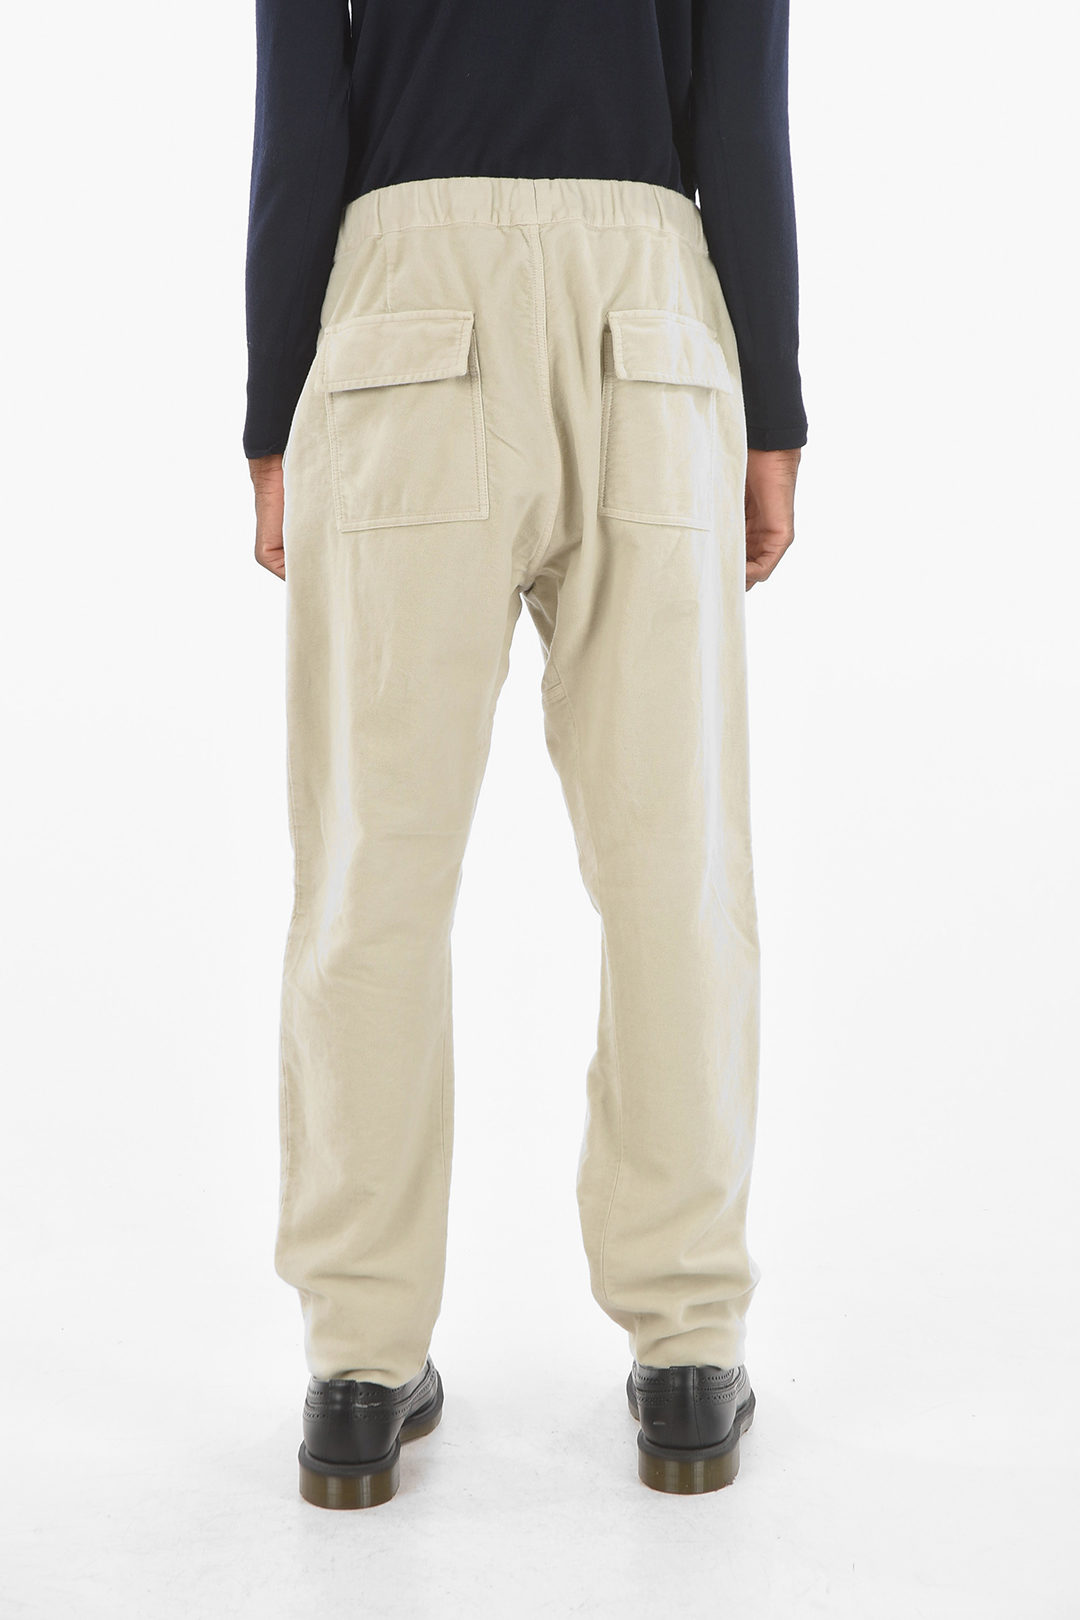 Discover more than 141 flap pocket pants super hot - in.eteachers